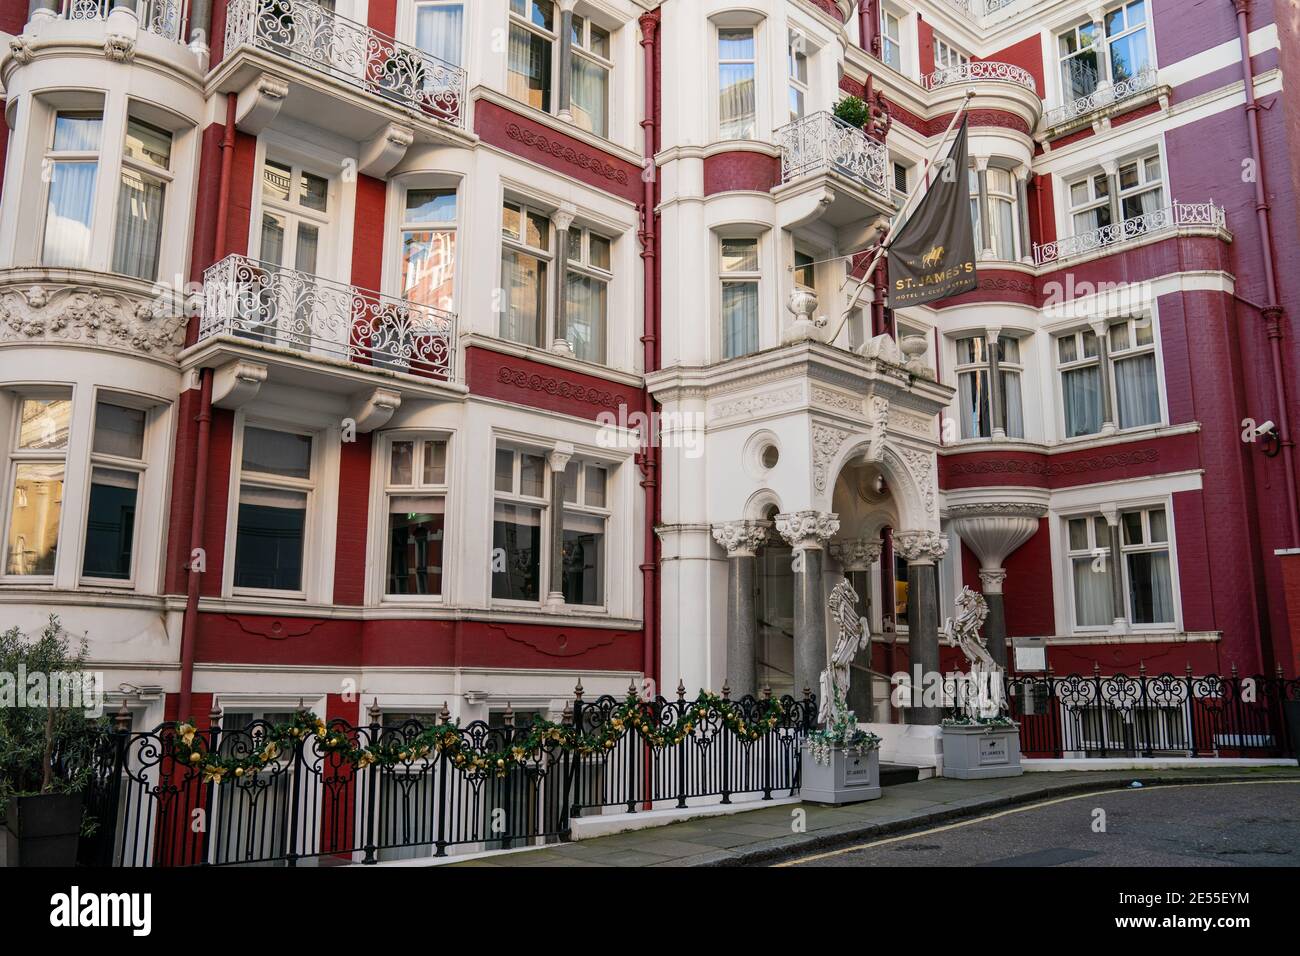 St. James Hotel & Club in Mayfair, London, UK Stock Photo